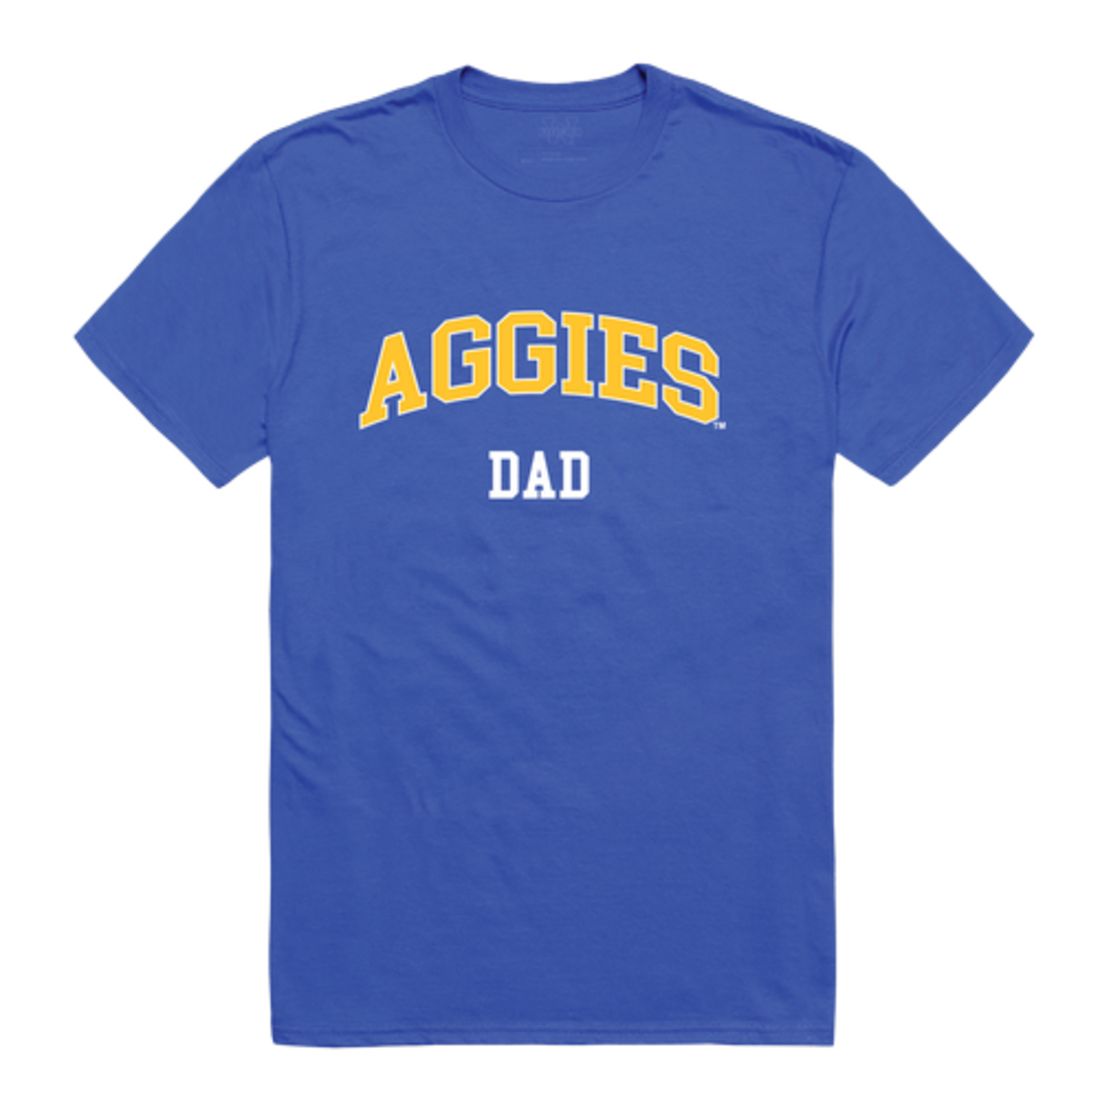 North Carolina A&T State University Aggies Dad T-Shirt